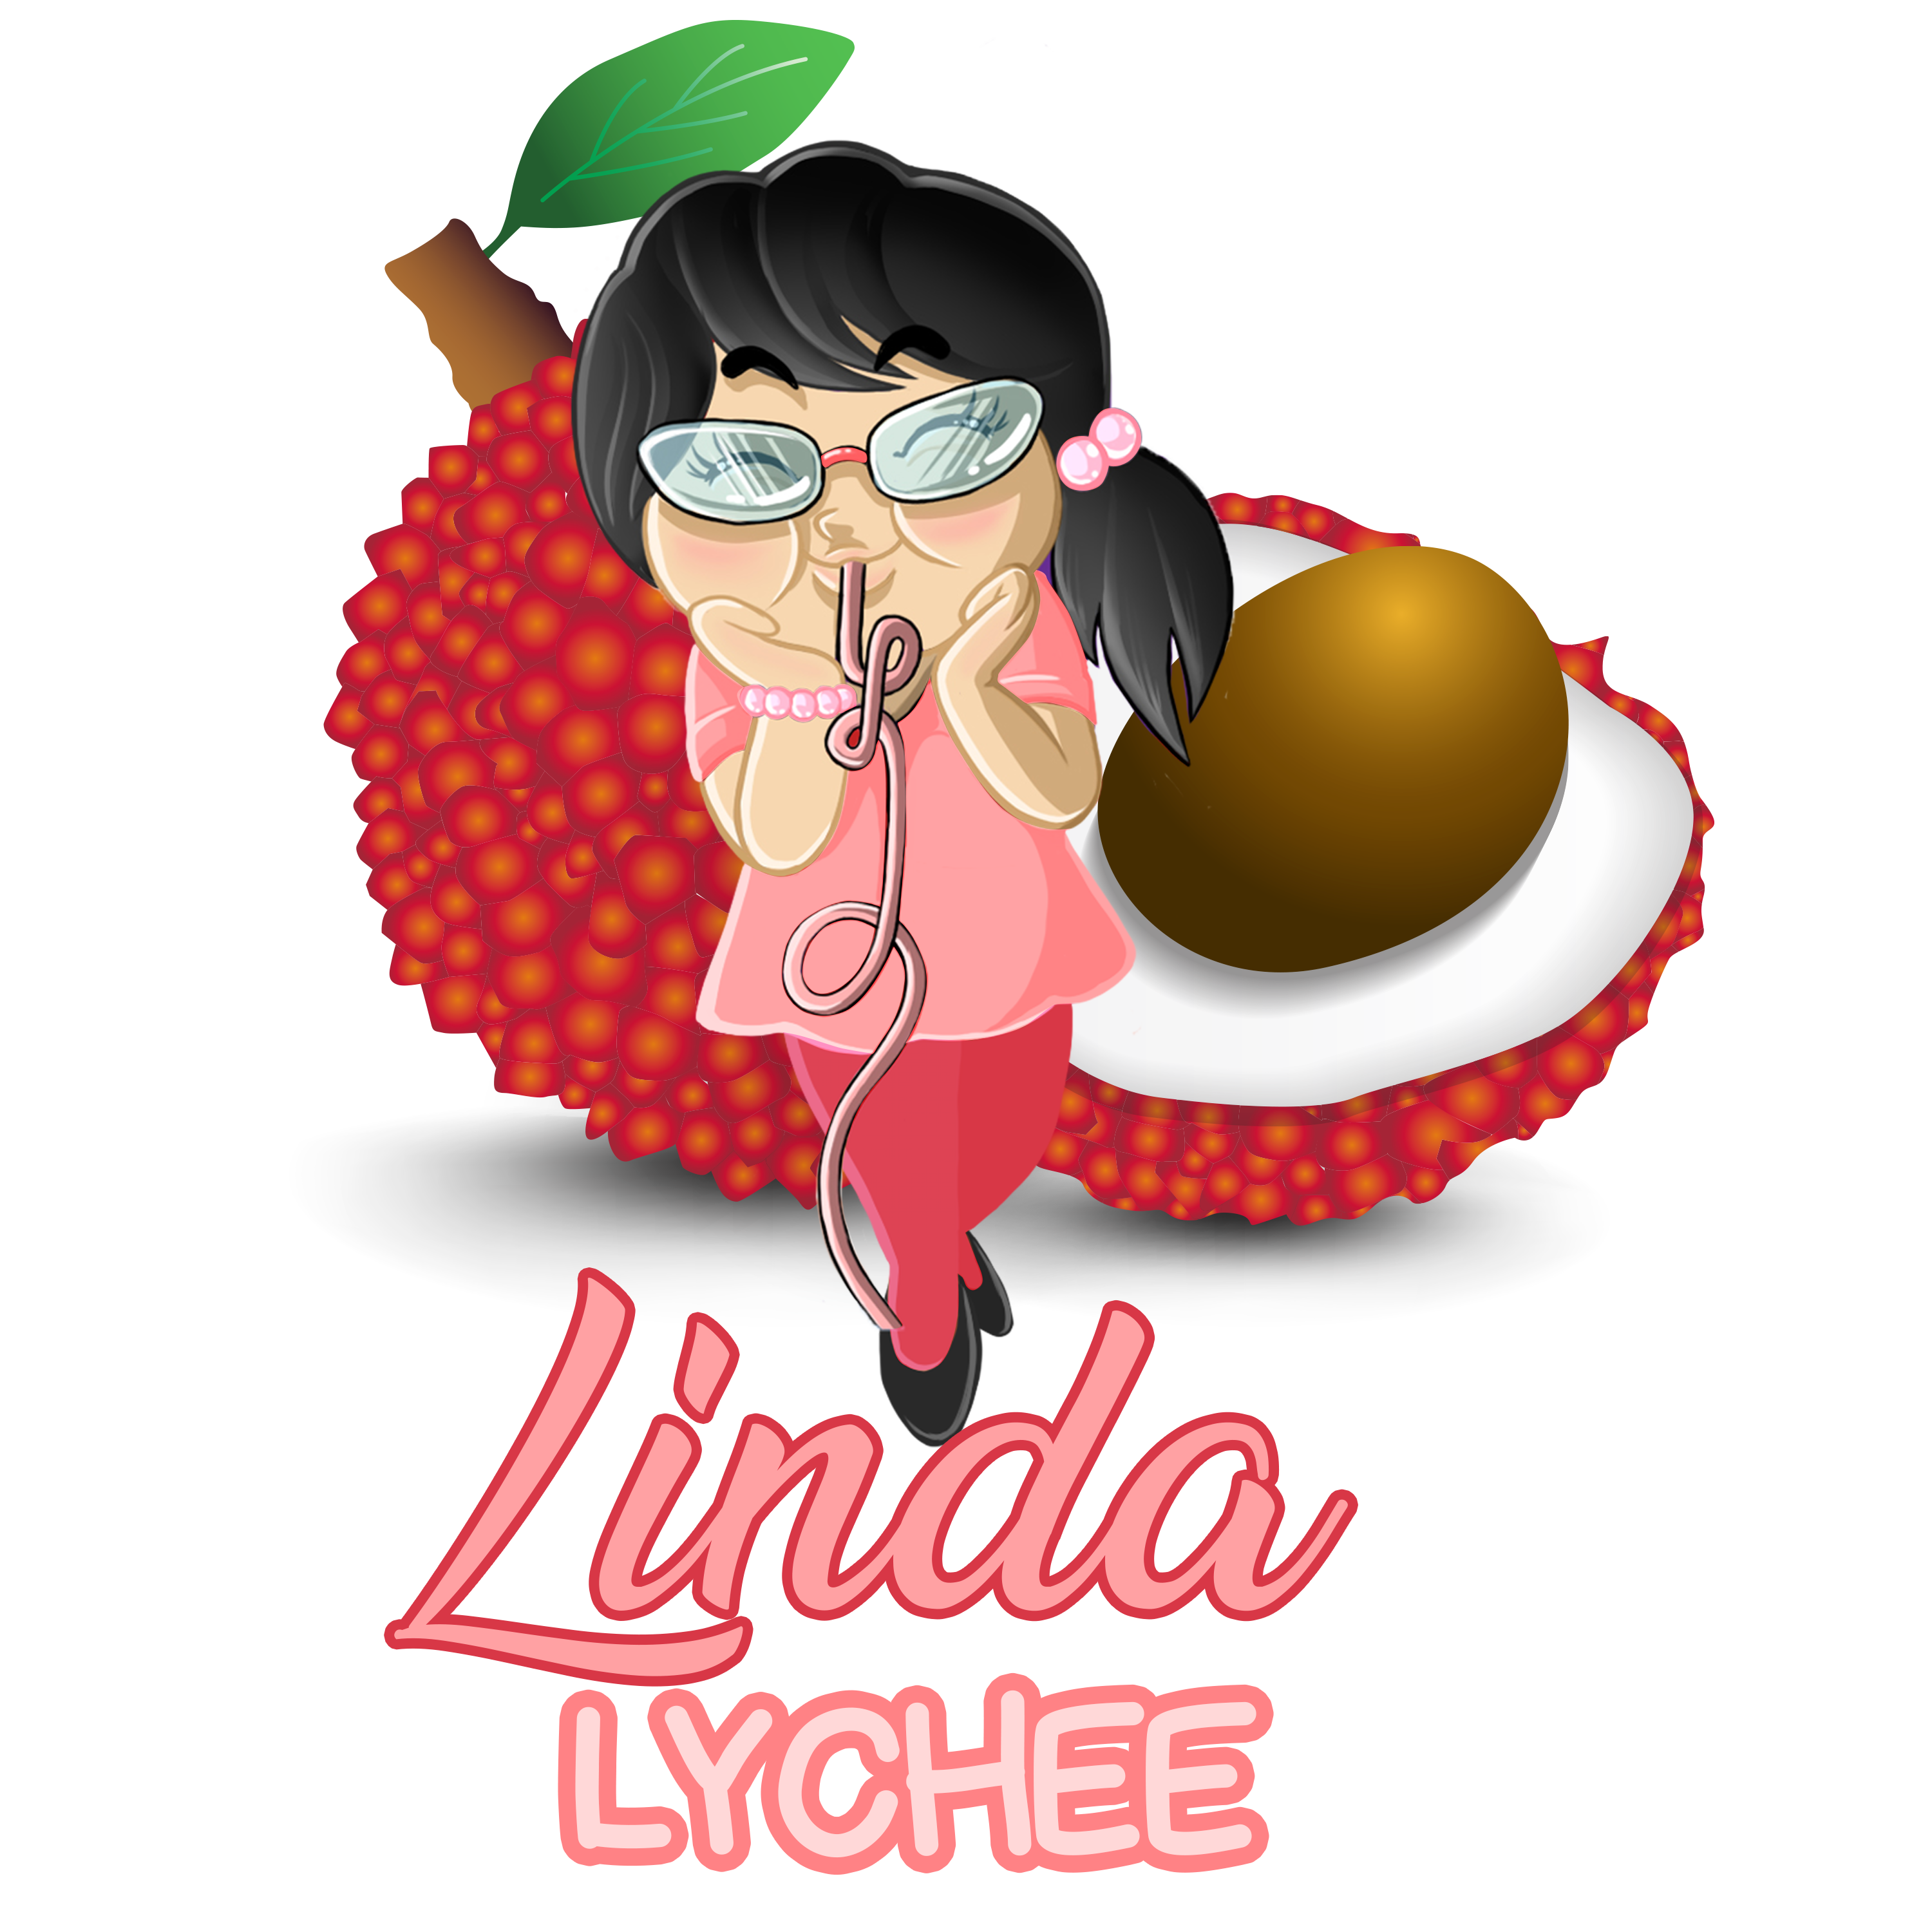 Linda Lychee